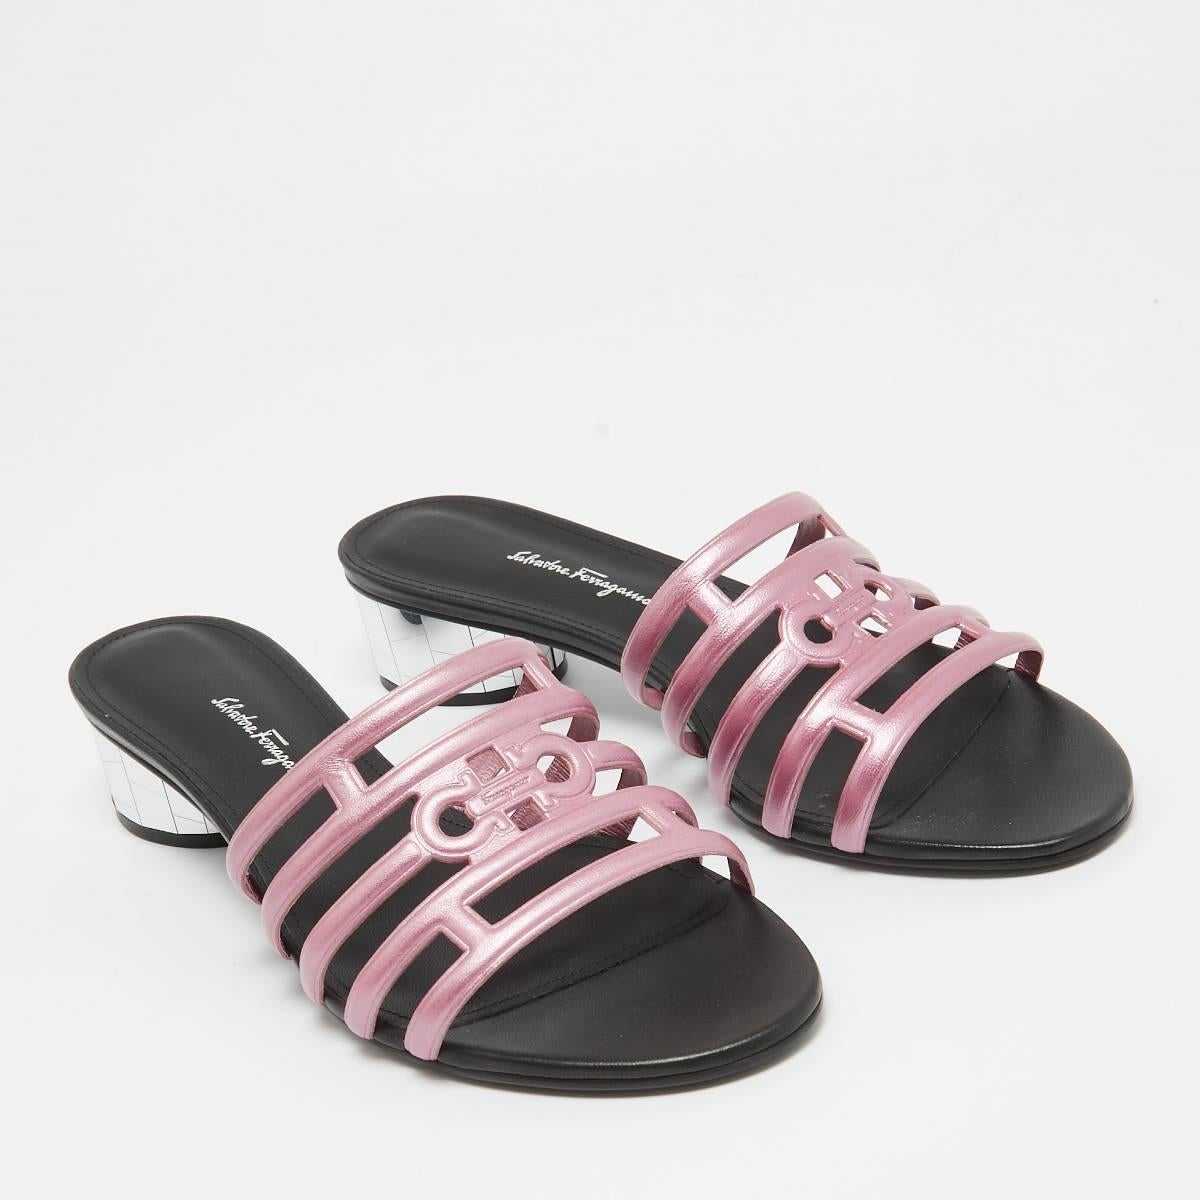 Salvatore Ferragamo Pink/Black Leather Finn Slide Sandals Size 39.5 2